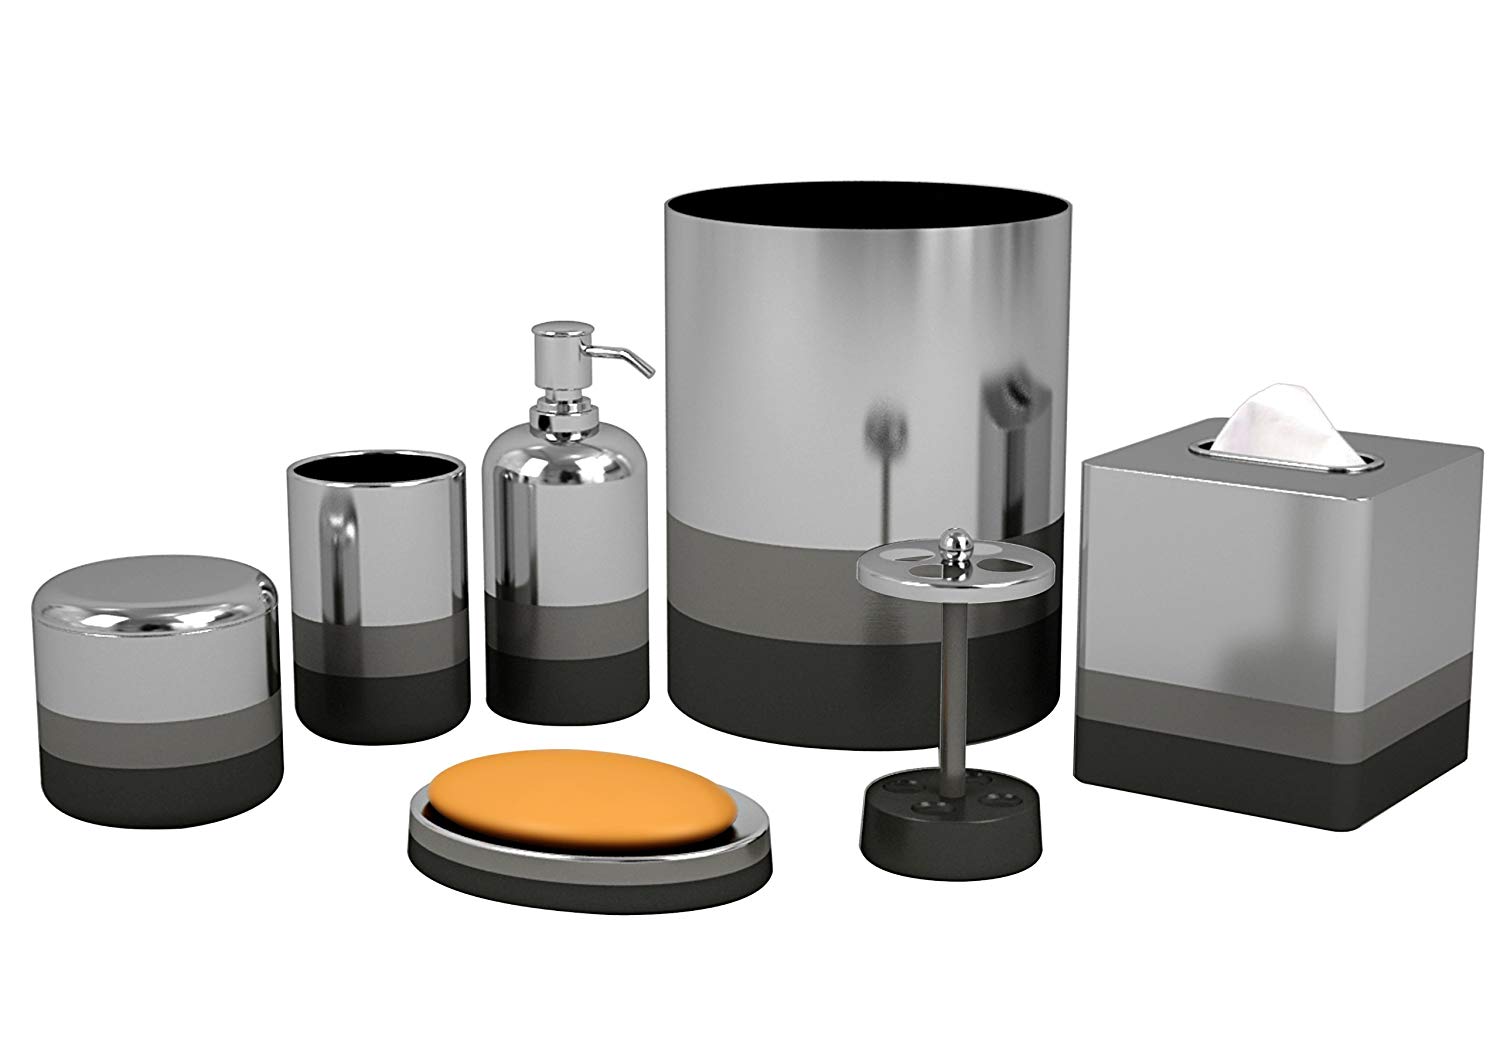 amazon.com: nu Steel Triune bathroom accessories set, 7 pieces: home & kitchen IQKDFMU